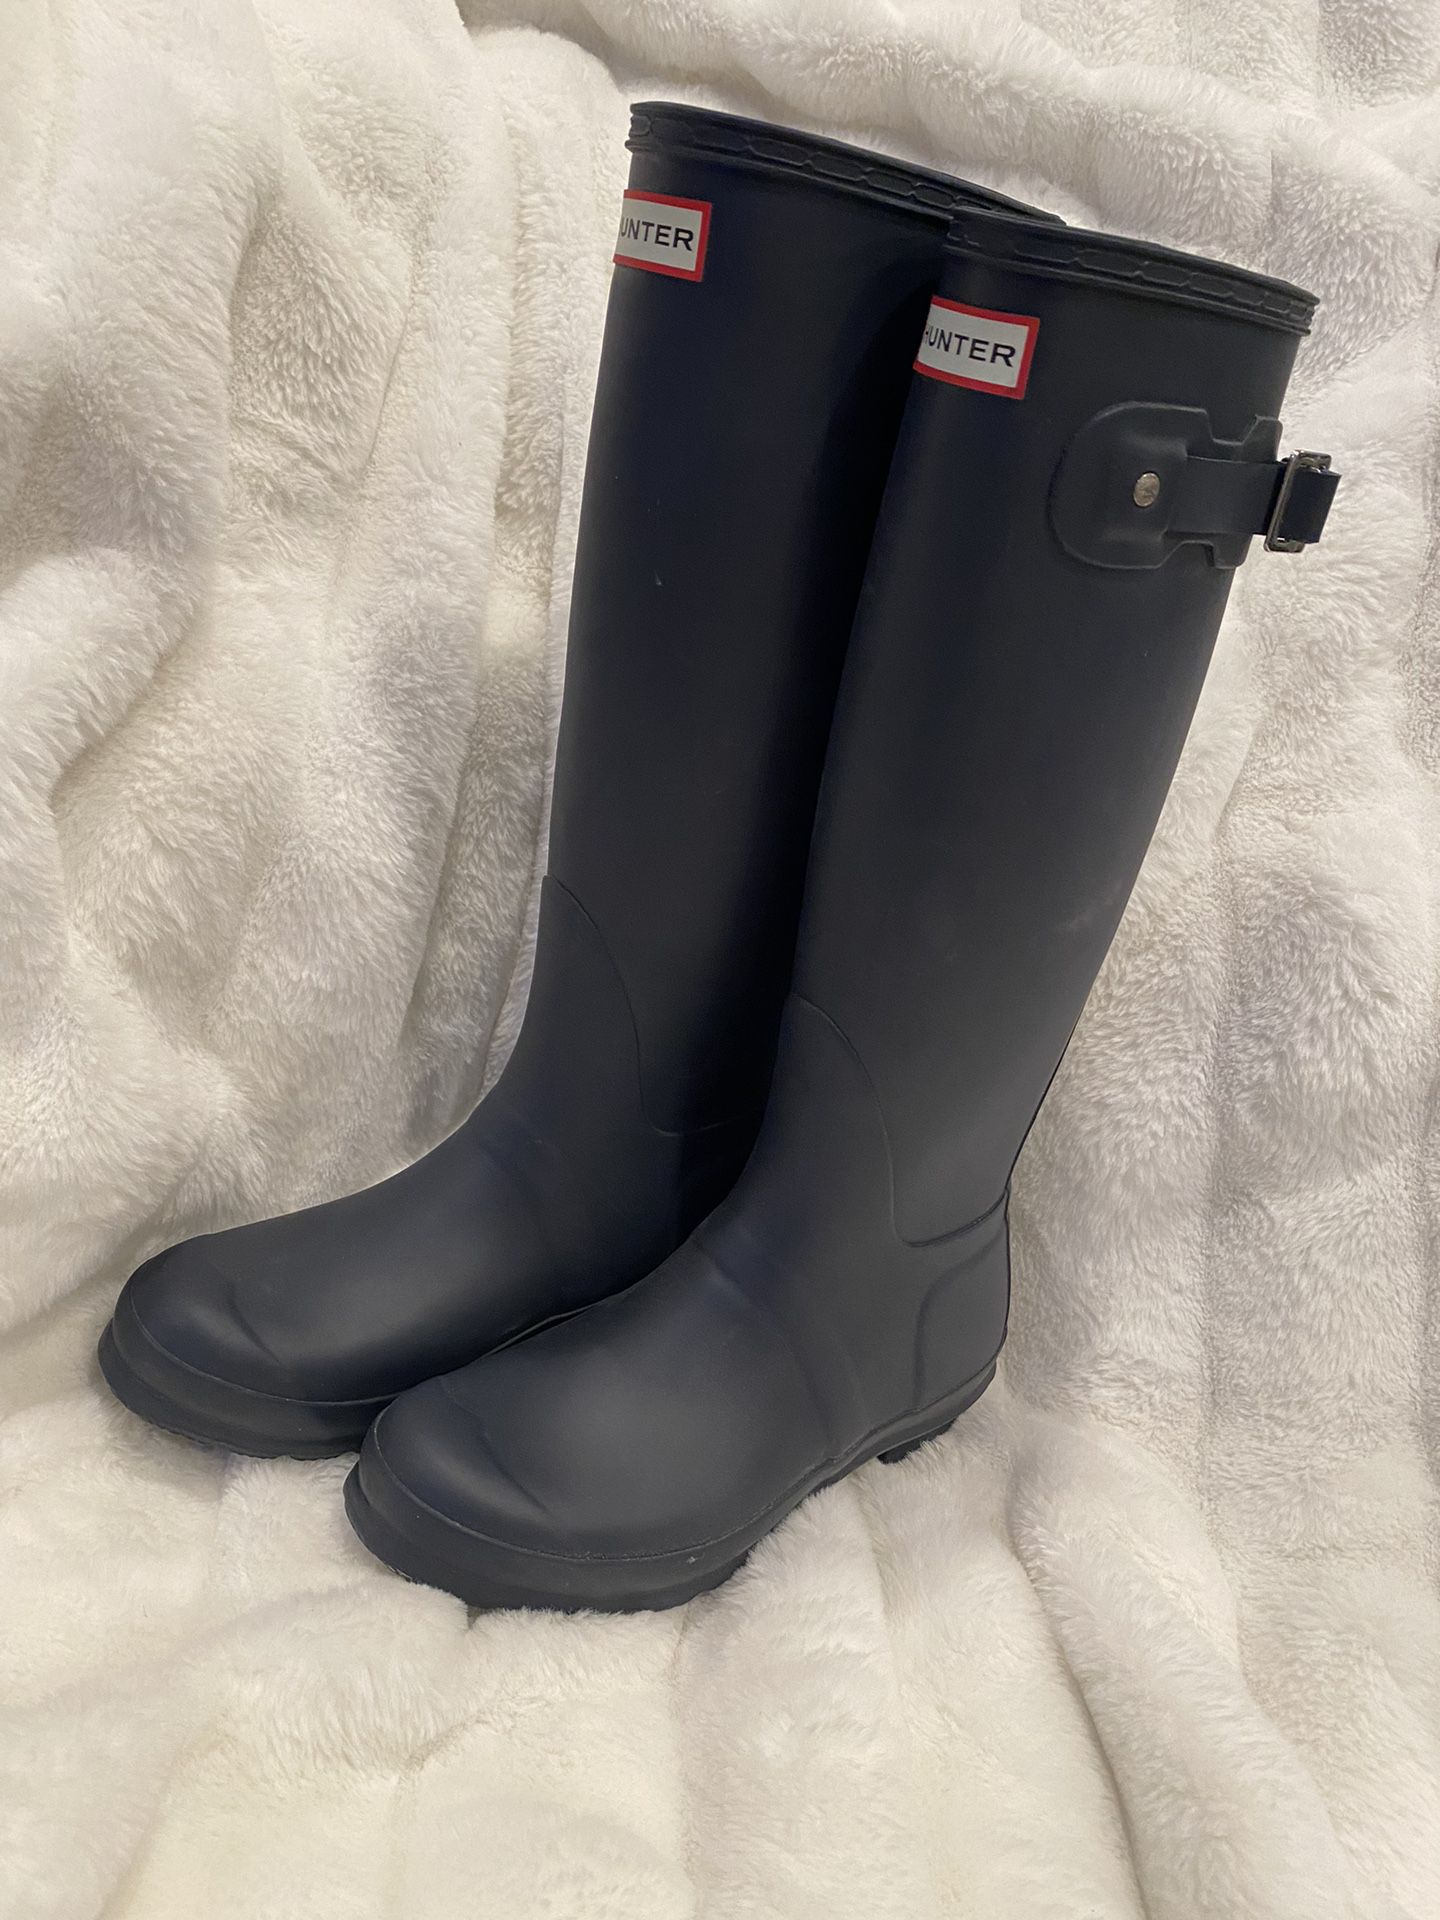 Rain Boots  Hunter boots  Size 7 